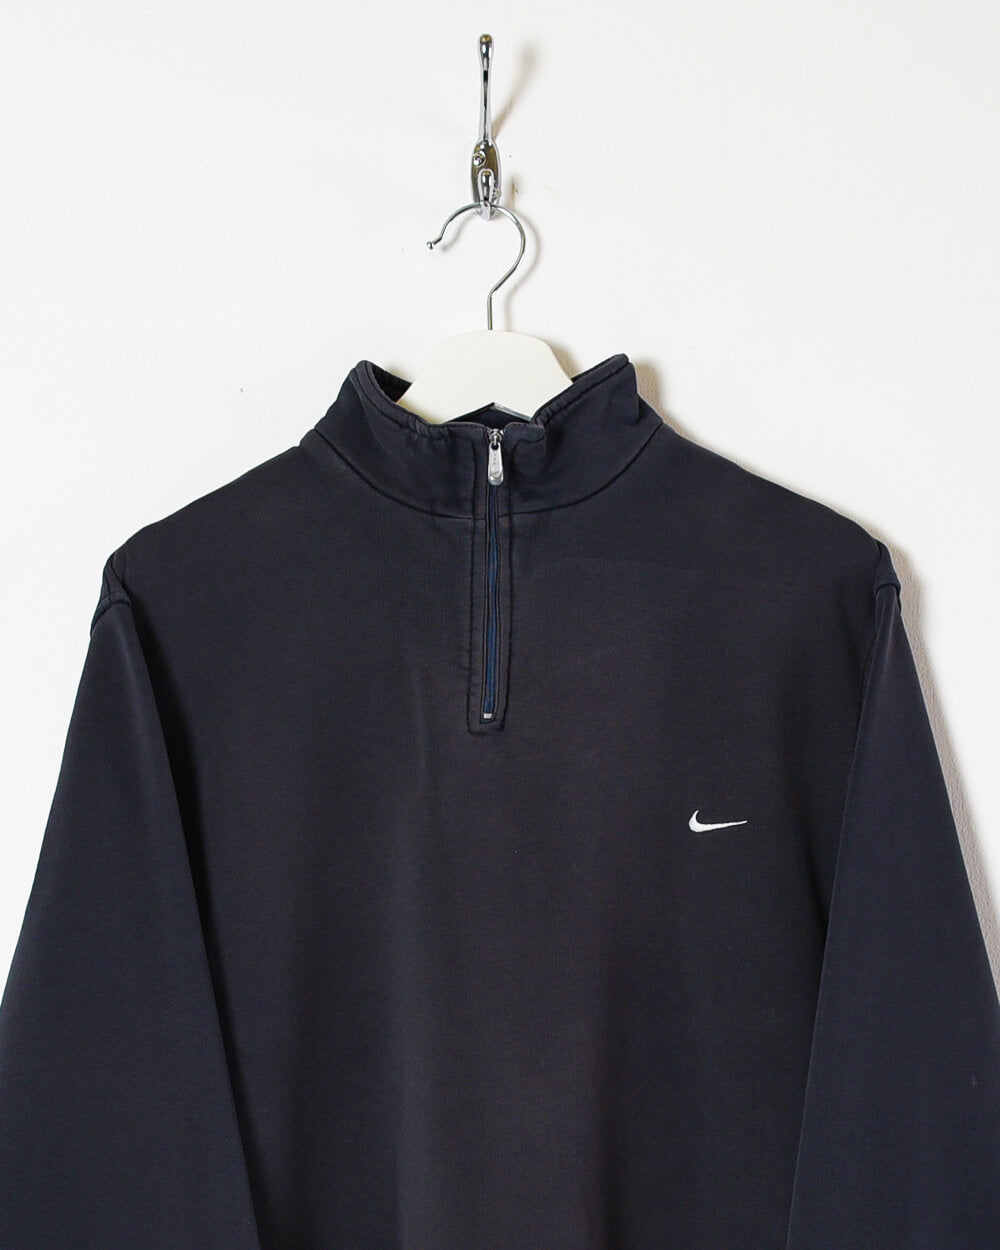 Black Nike 1/4 Zip Sweatshirt - Large